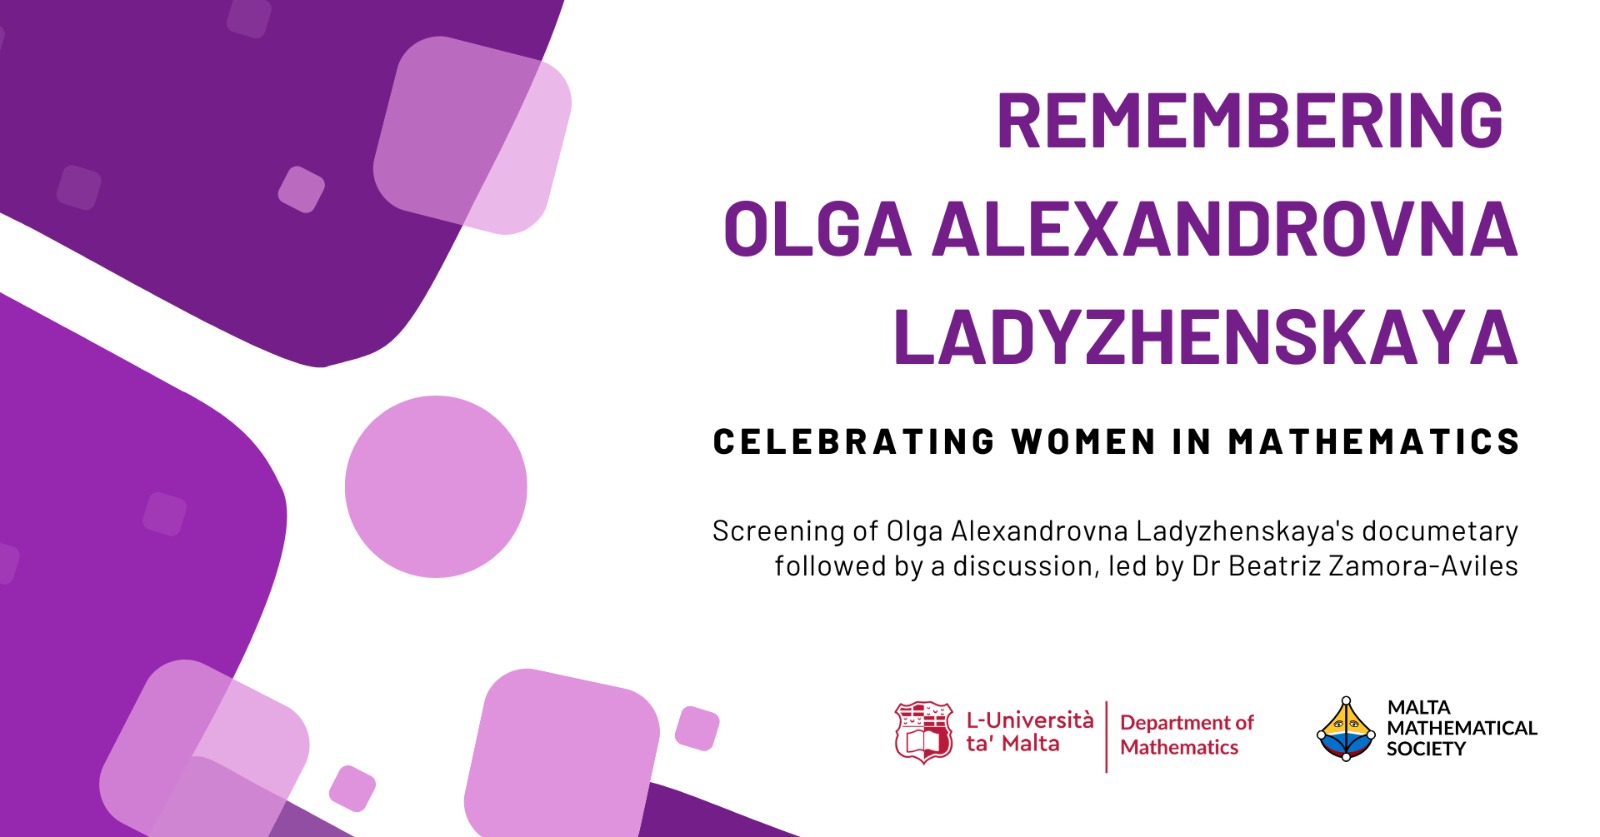 Event banner with purple decoration entitled "Remembering Olga Alexandrovna Ladyzhenskaya", subtitled "Celebrating Women in Mathematics"